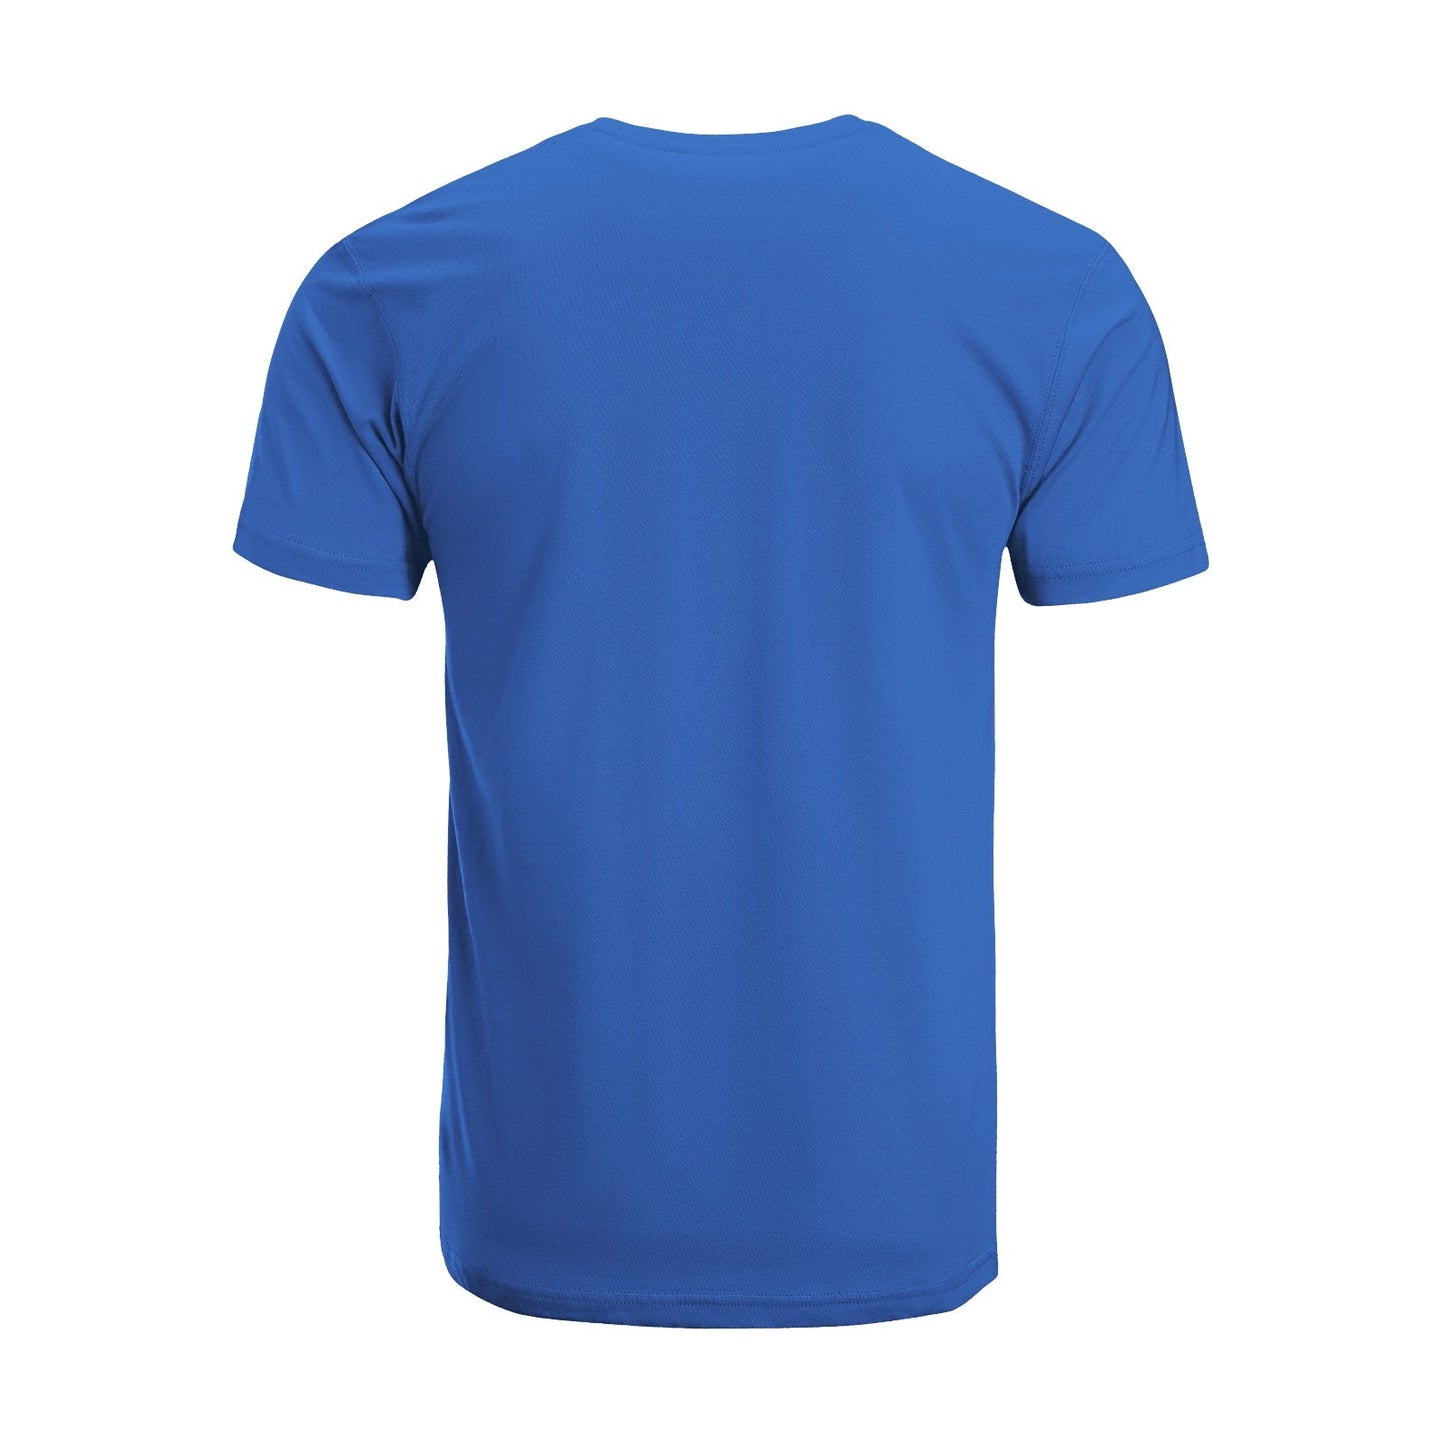 Unisex Short Sleeve Crew Neck Cotton Jersey T-Shirt MOM 15